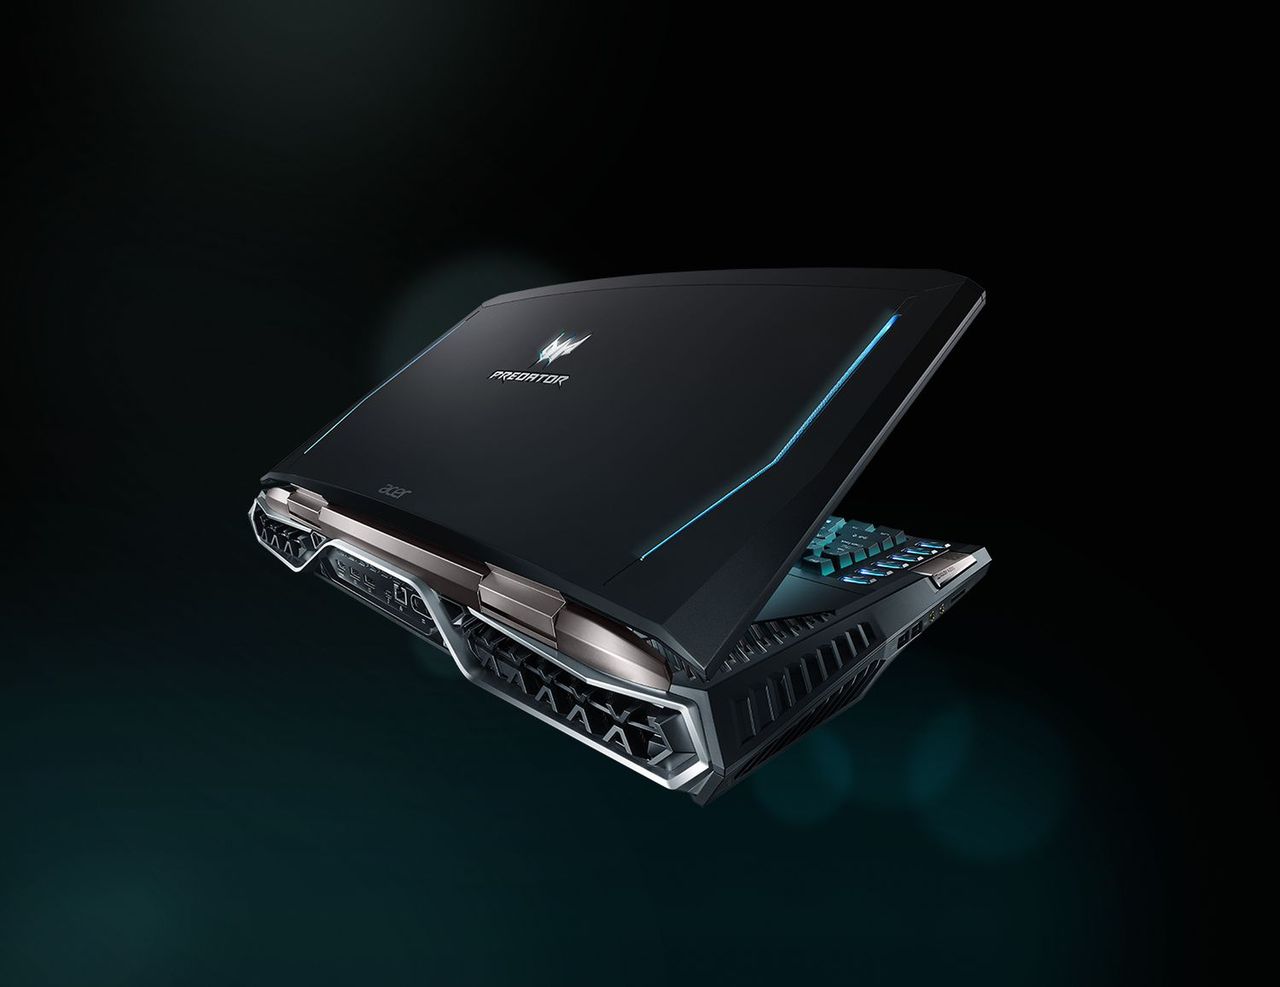 Predator 21X to laptop za 9999 euro: Acer z gamingowym monstrum na #CES2017